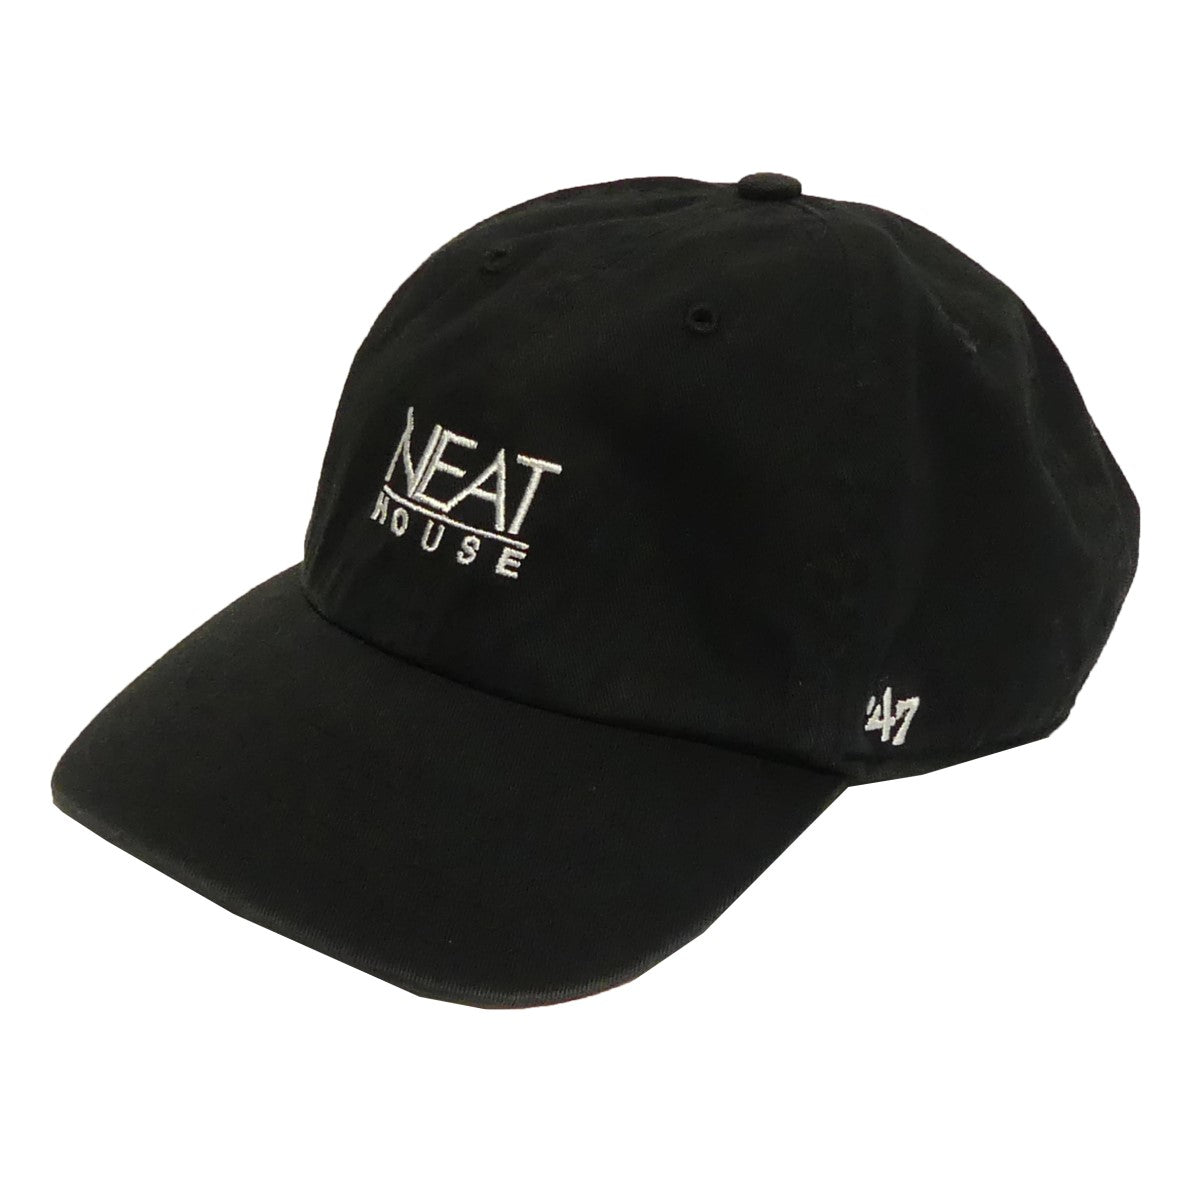 NEAT(ニート) NEAT HOUSE ロゴ コットン キャップ 47 Brand 103020-003 ブラック サイズ  14｜【公式】カインドオルオンライン ブランド古着・中古通販【kindal】